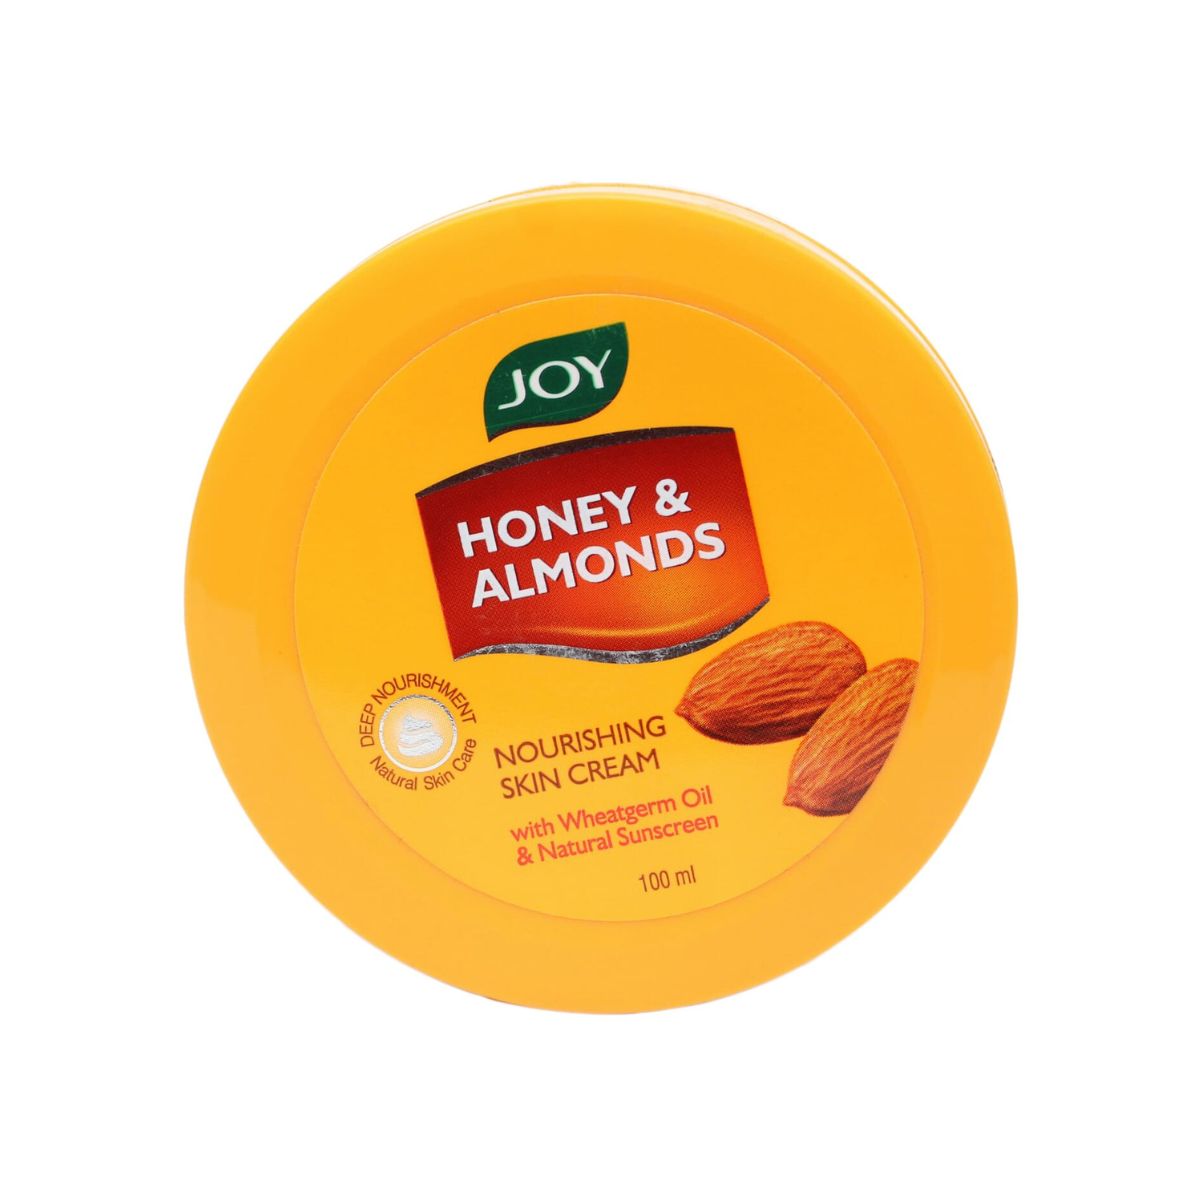 Joy Honey & Almonds - Nourishing Skin Cream With Wheatgerm Oil & Natural Sunscreen - 100ml